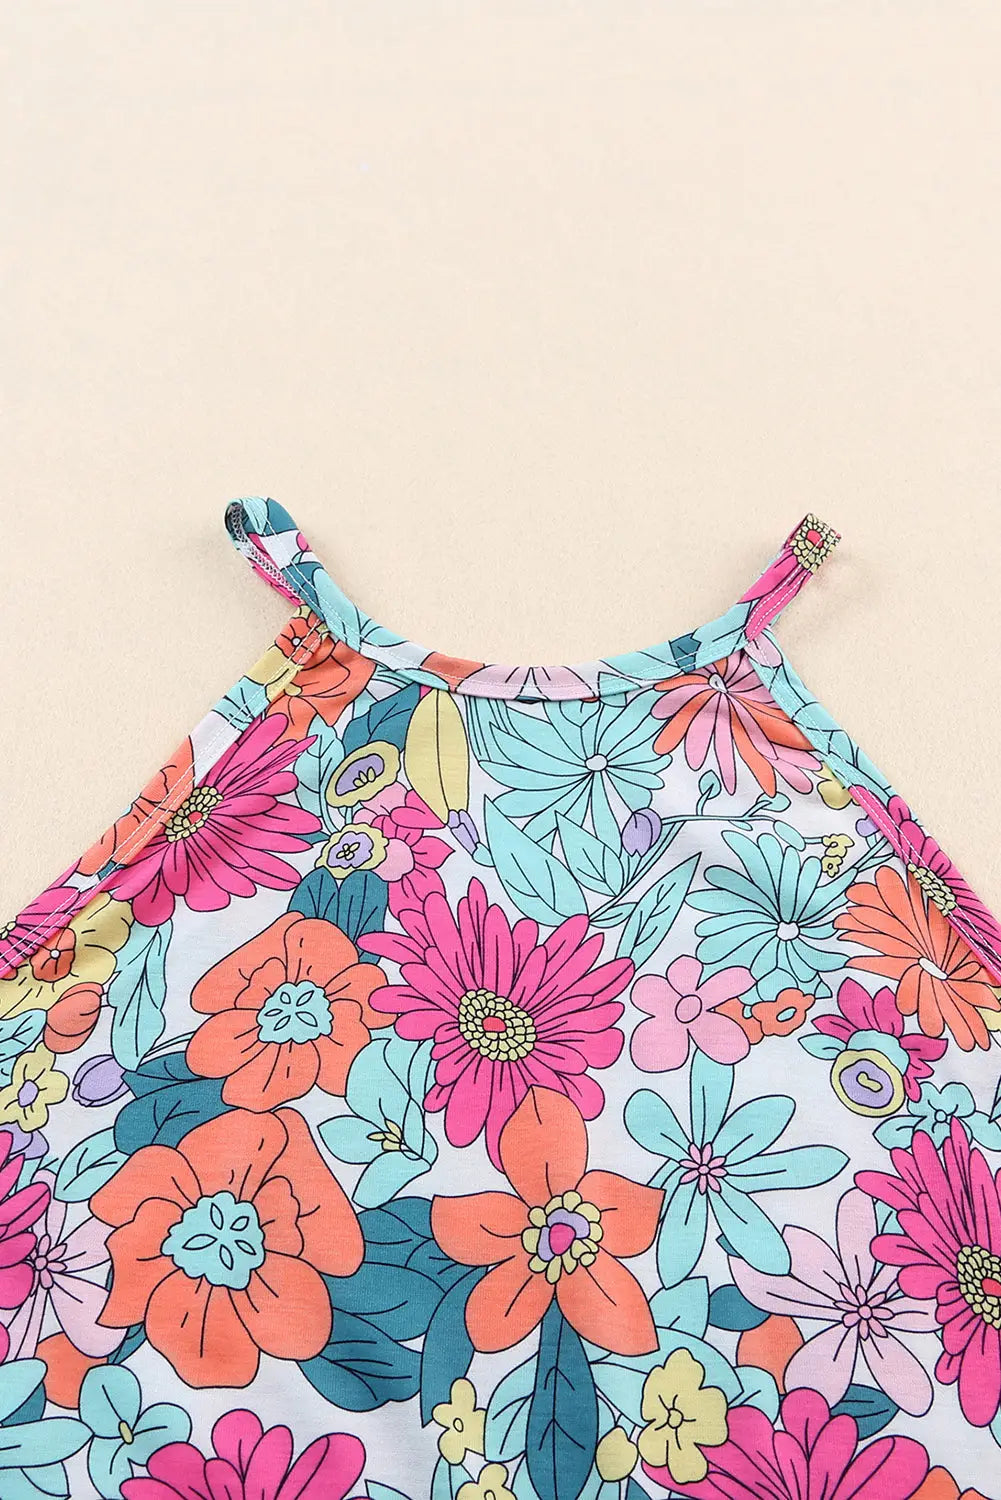 Multicolor vibrant summer floral print spaghetti strap jumpsuit - jumpsuits & rompers